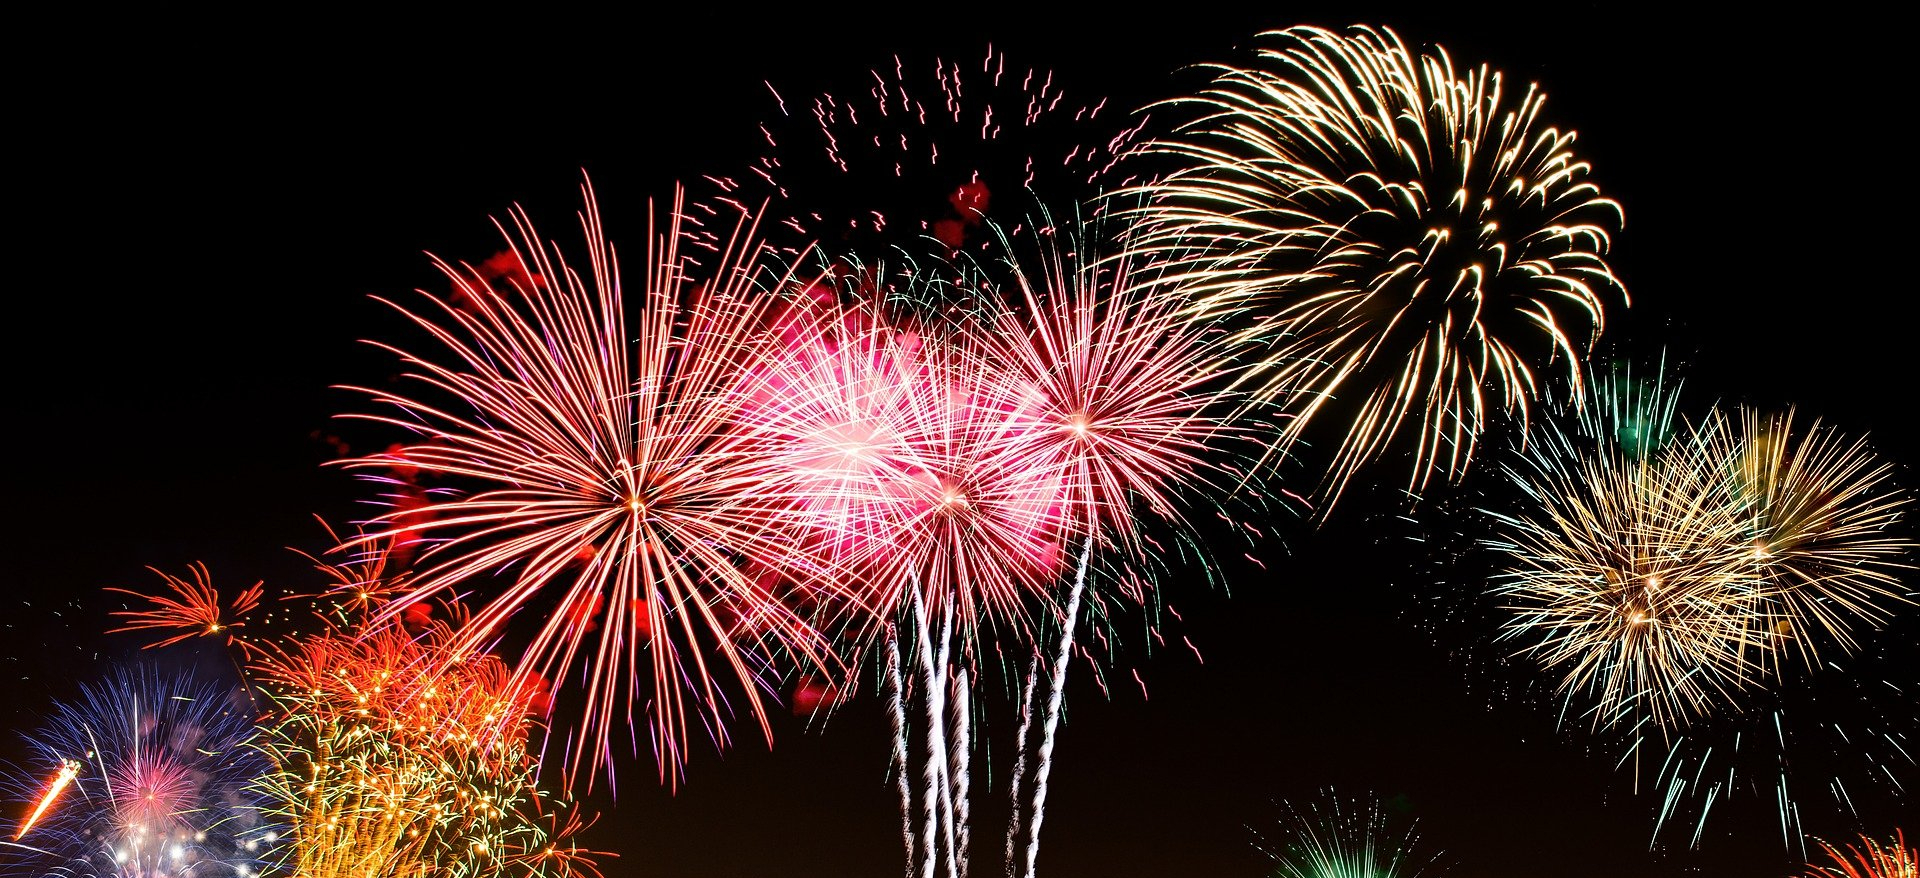 Fireworks from pixabay